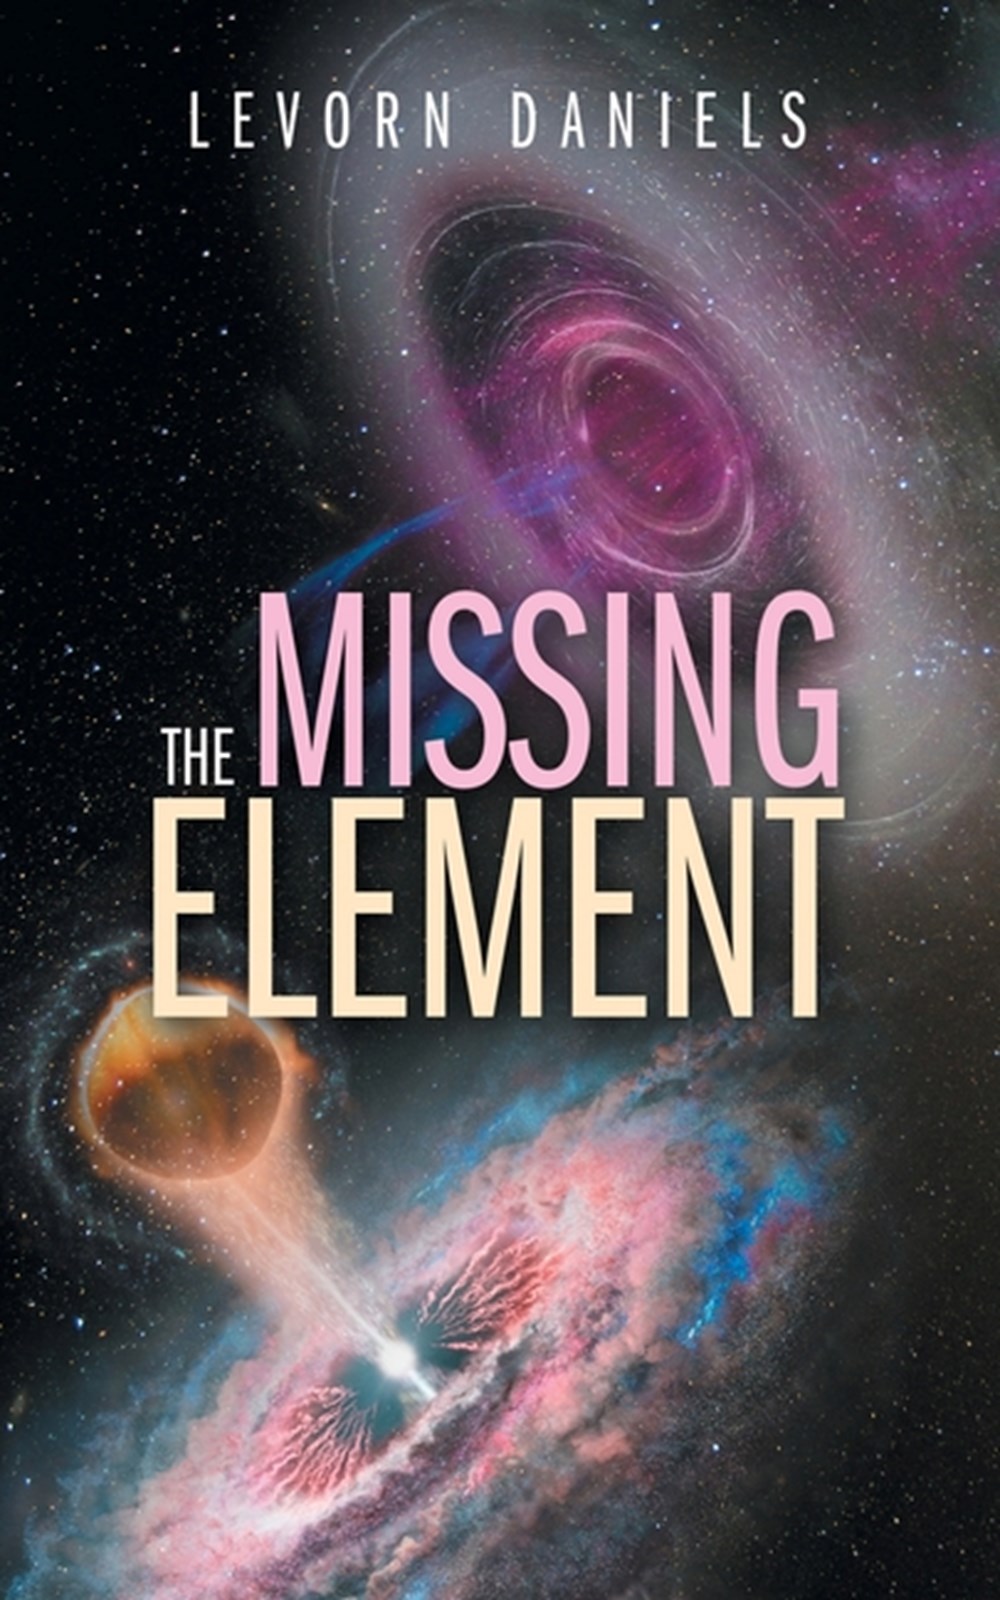 Missing Element